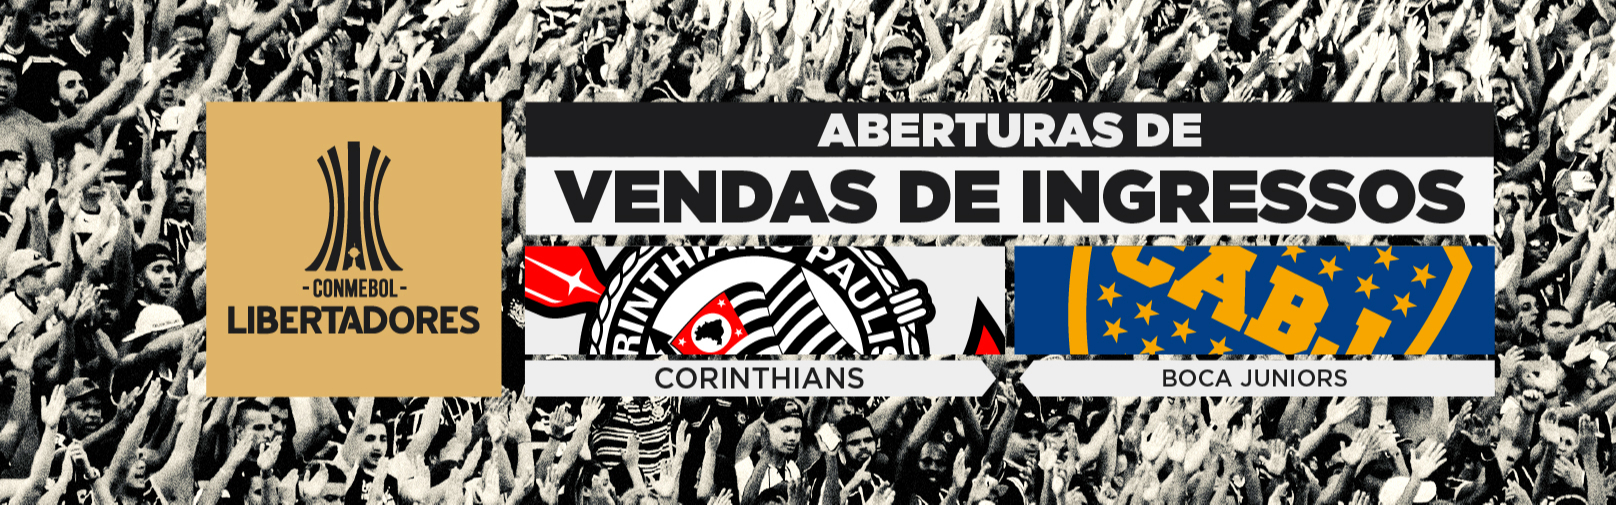 CONMEBOL Libertadores 2022 – Vendas de ingressos: Corinthians x Boca Juniors-ARG (28/6) na Neo Química Arena